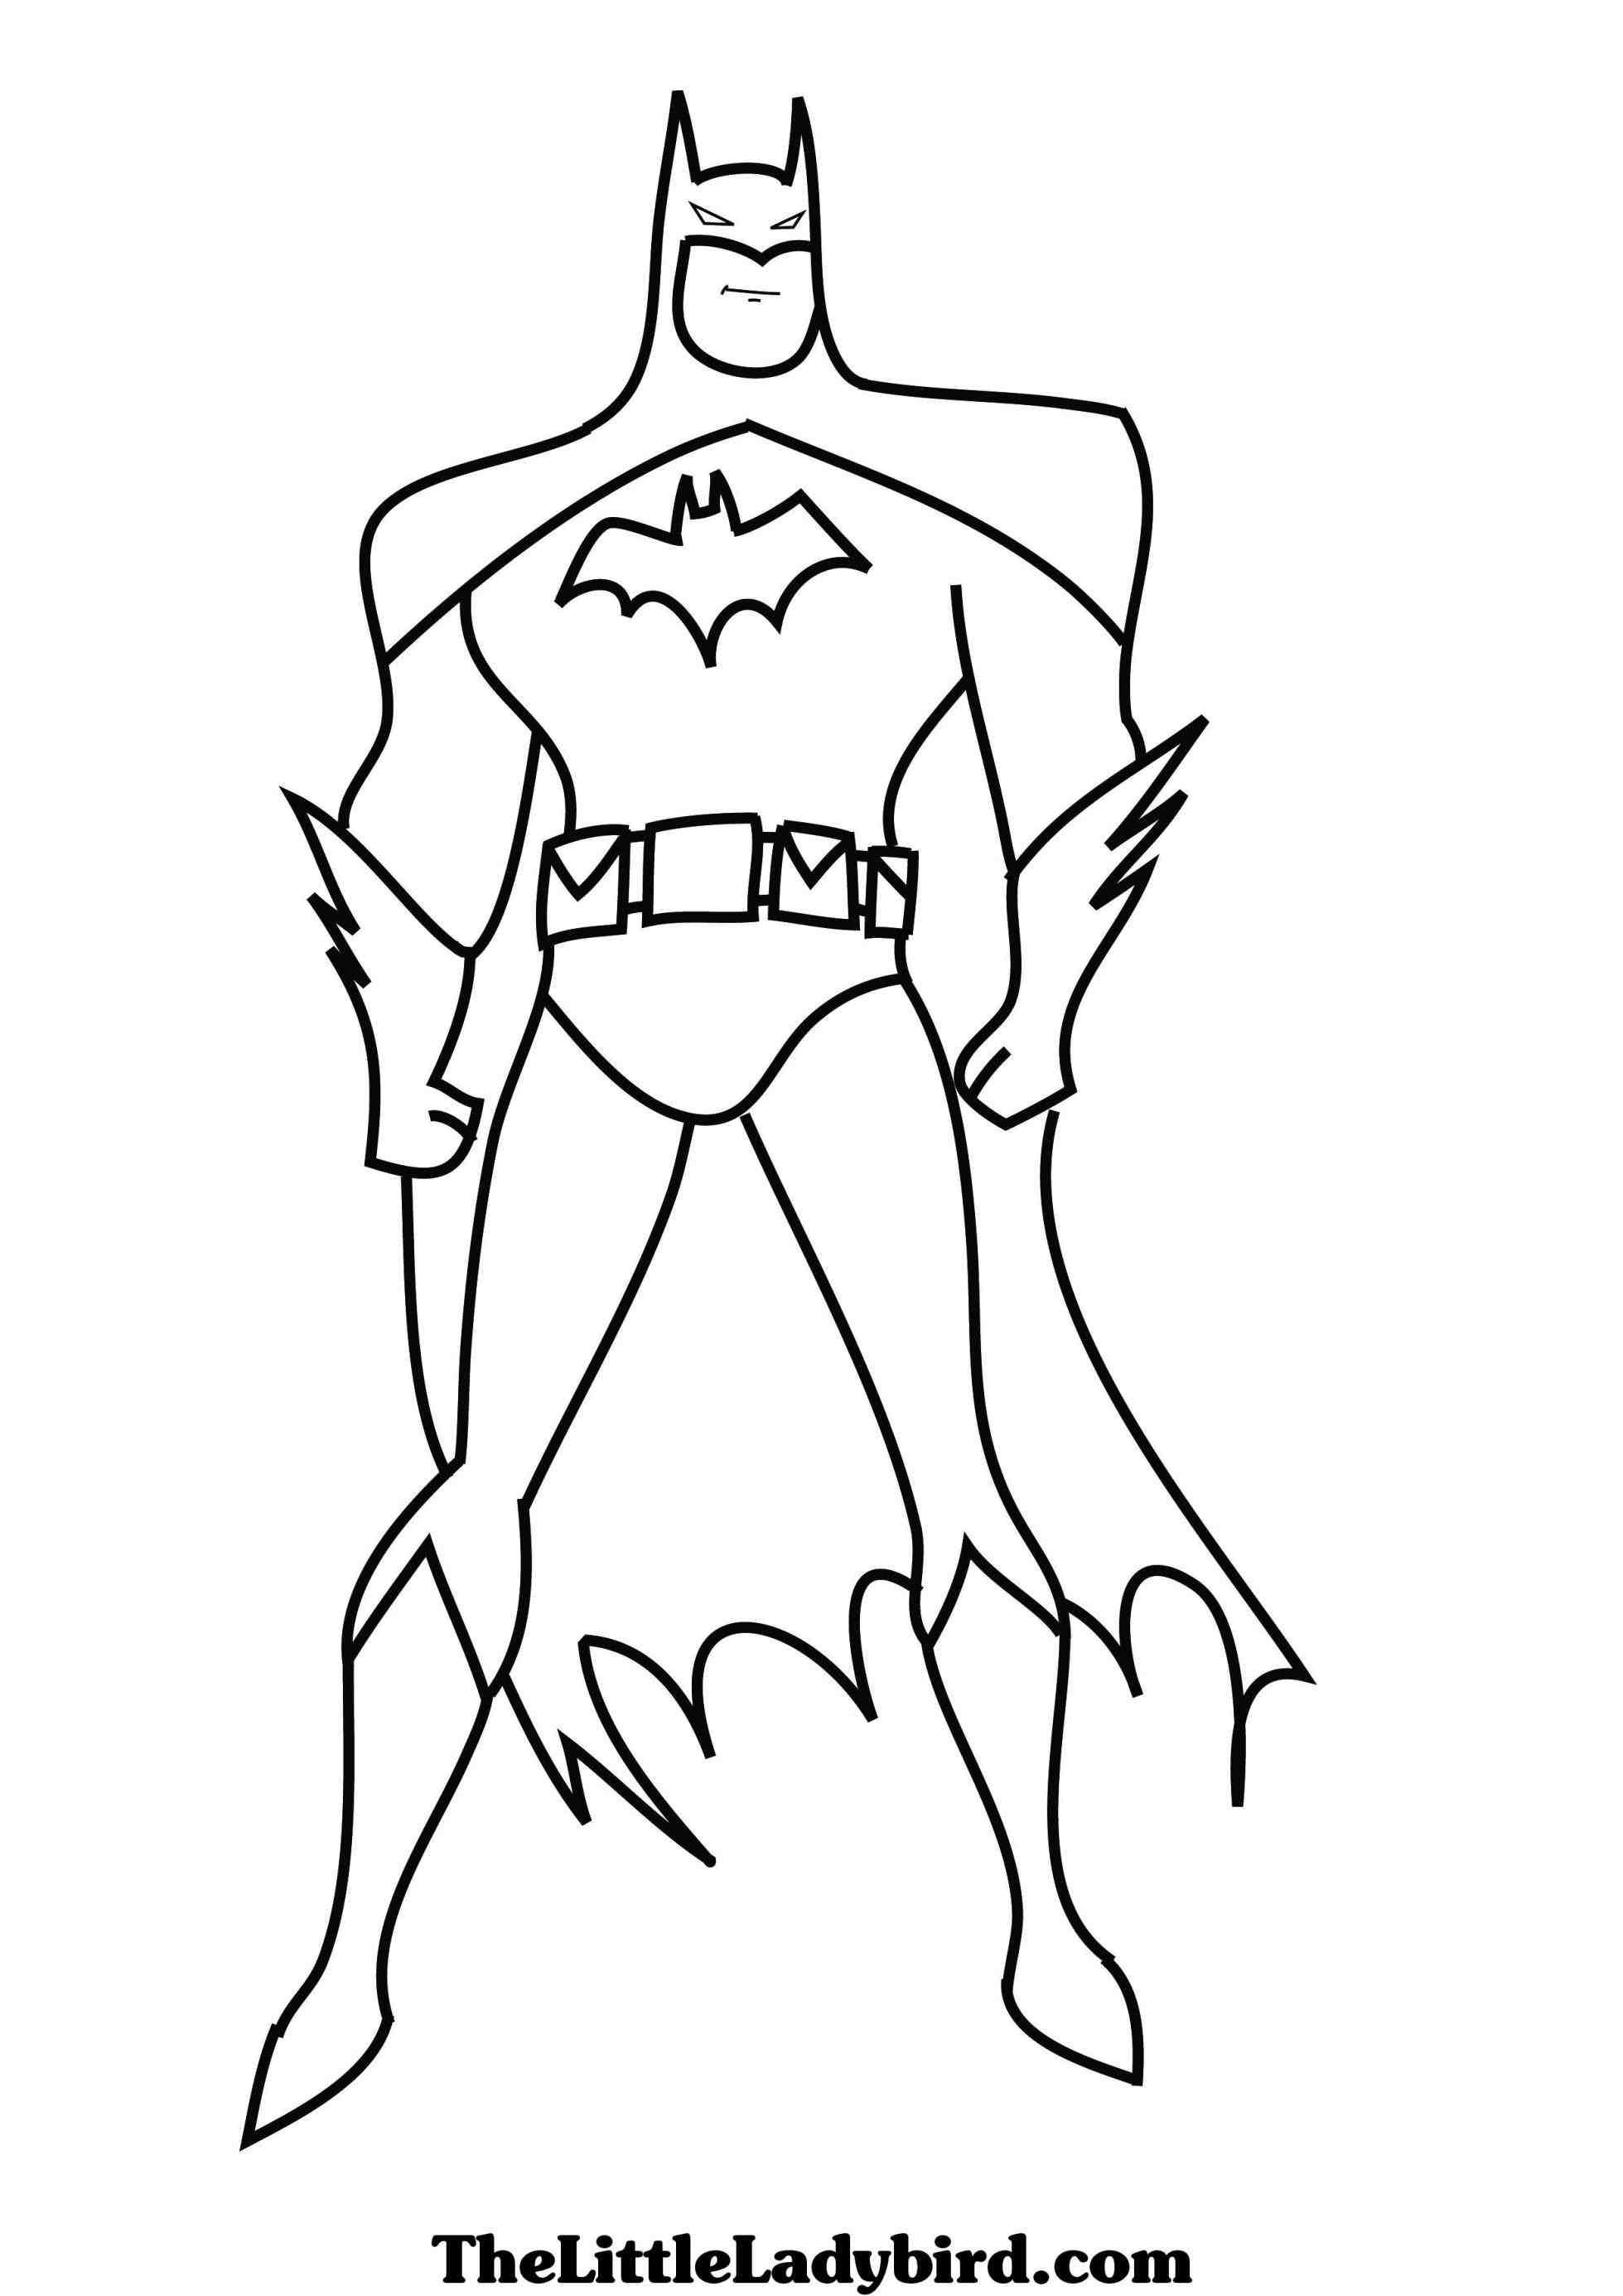 Coloring Pages Of Batman
 Batman clipart coloring page Pencil and in color batman